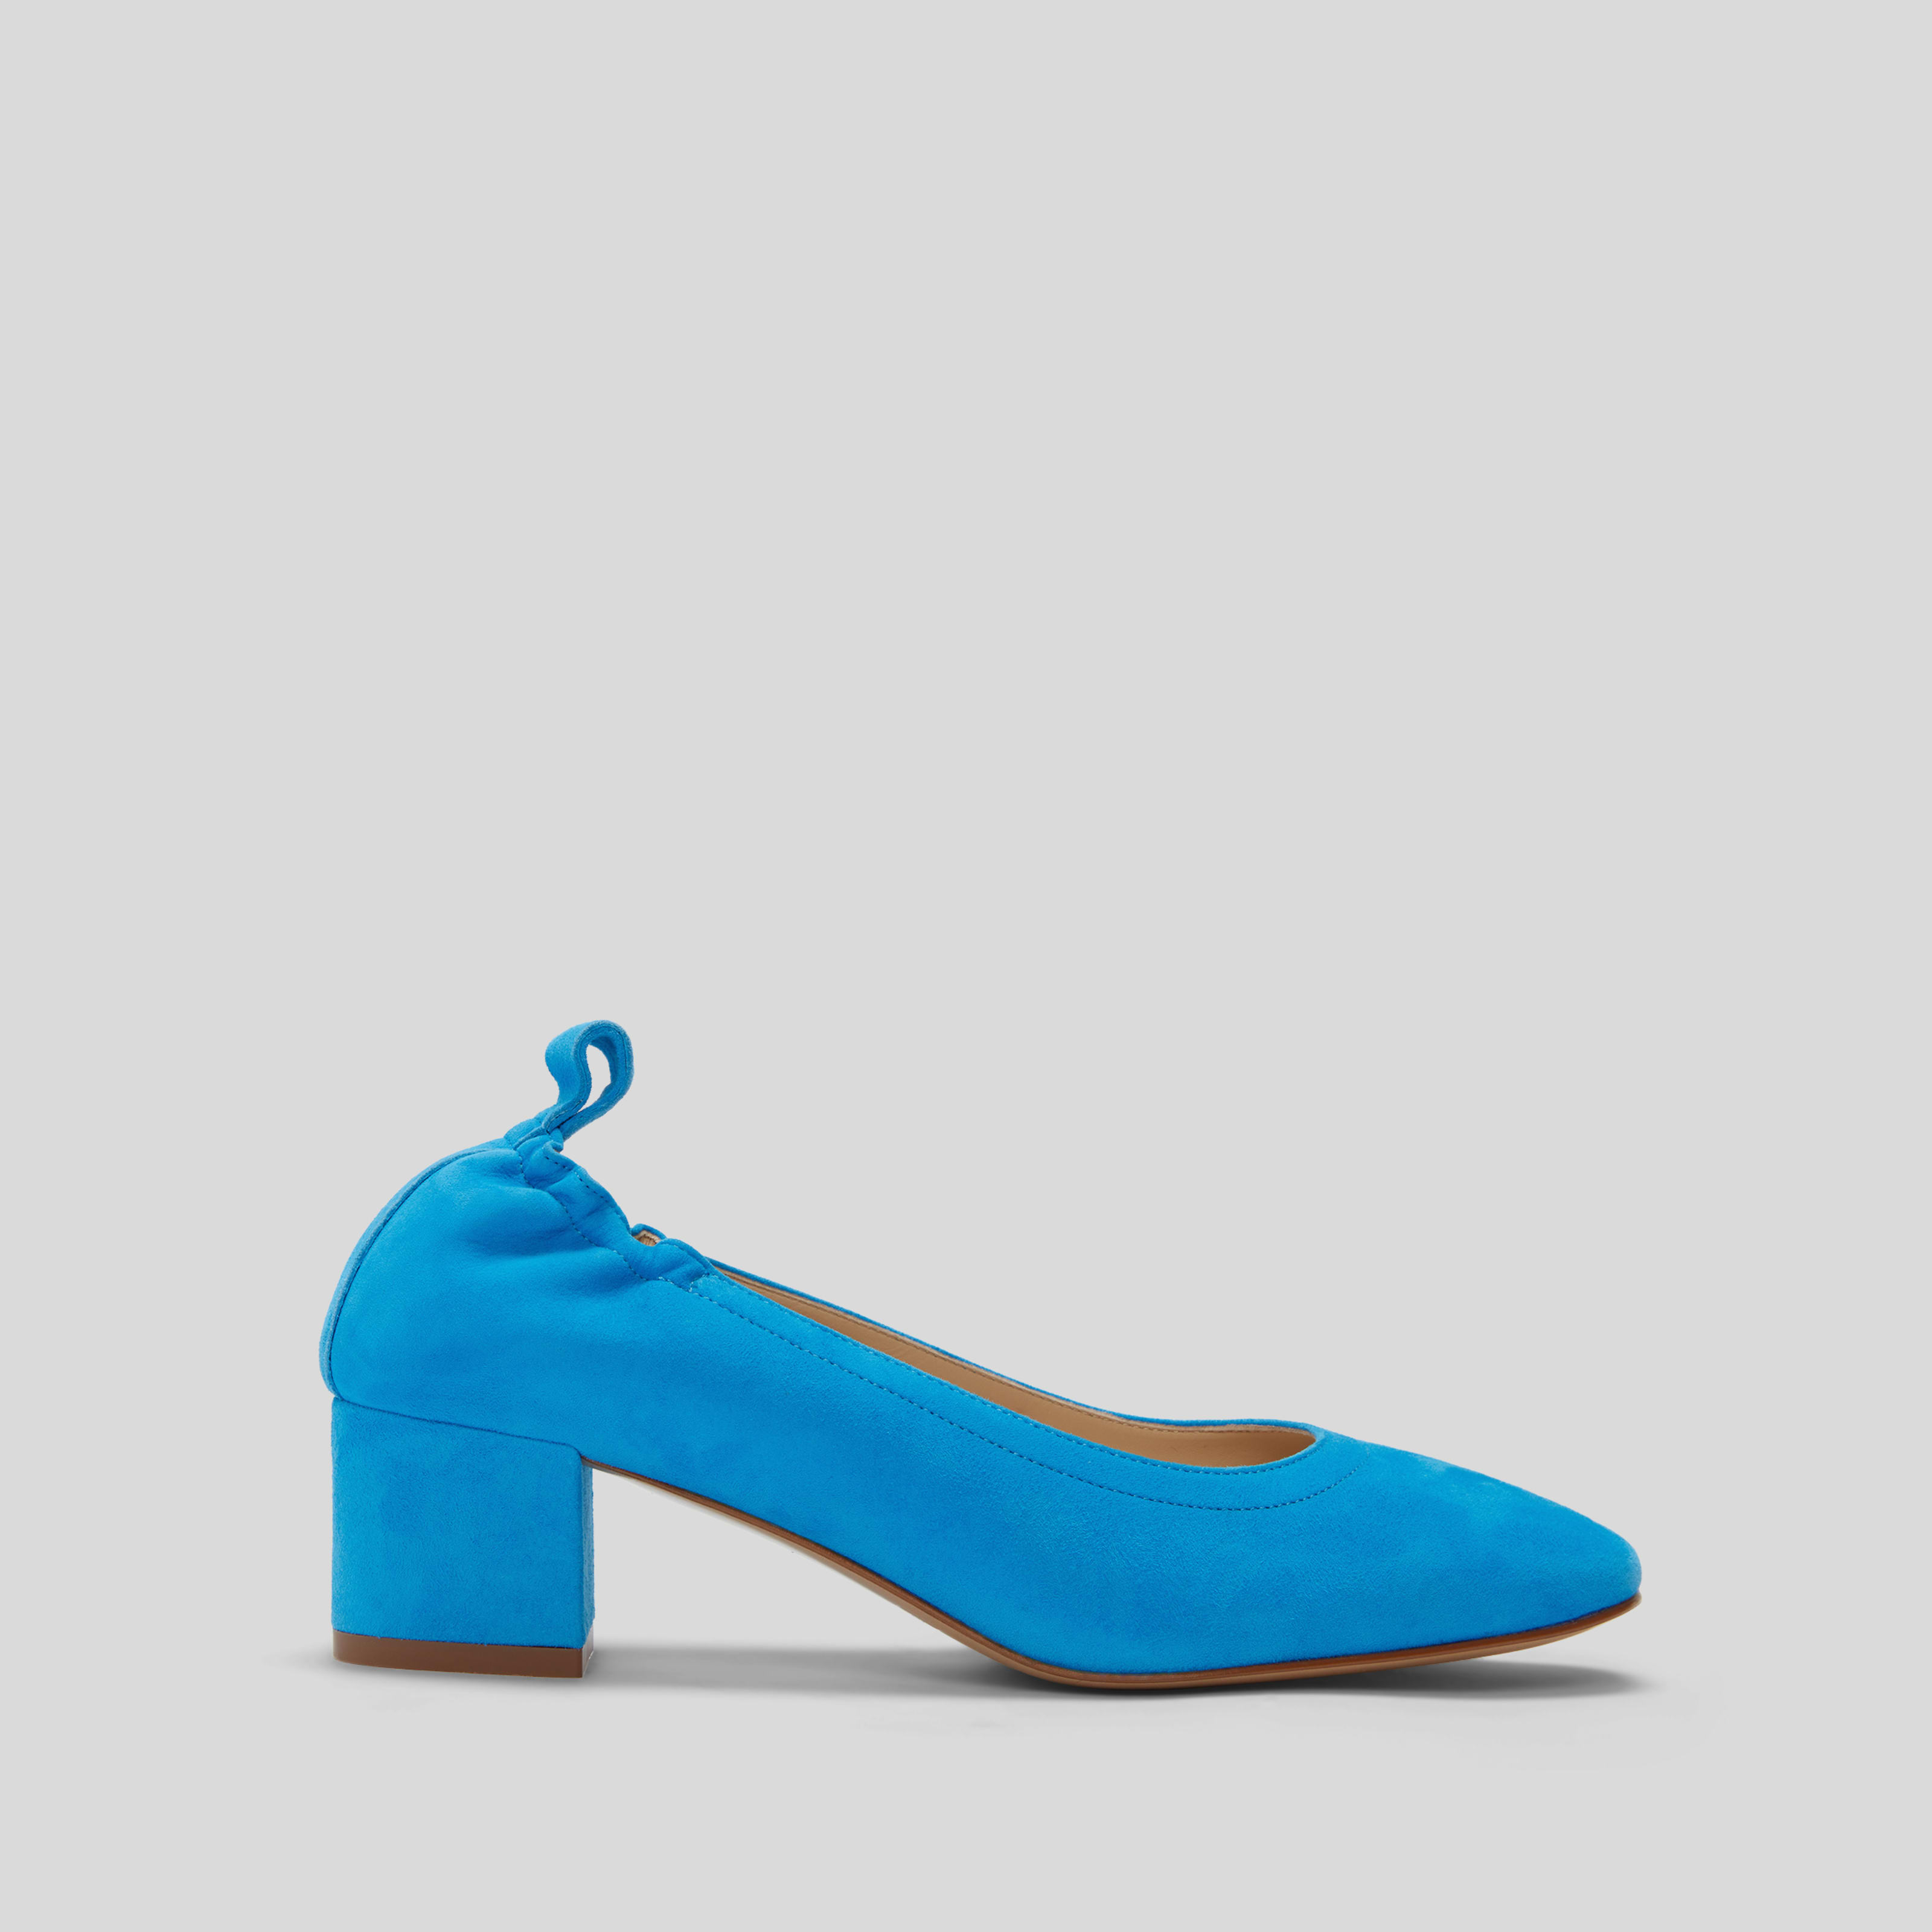 pump heel by everlane in brilliant blue suede, size 5.5